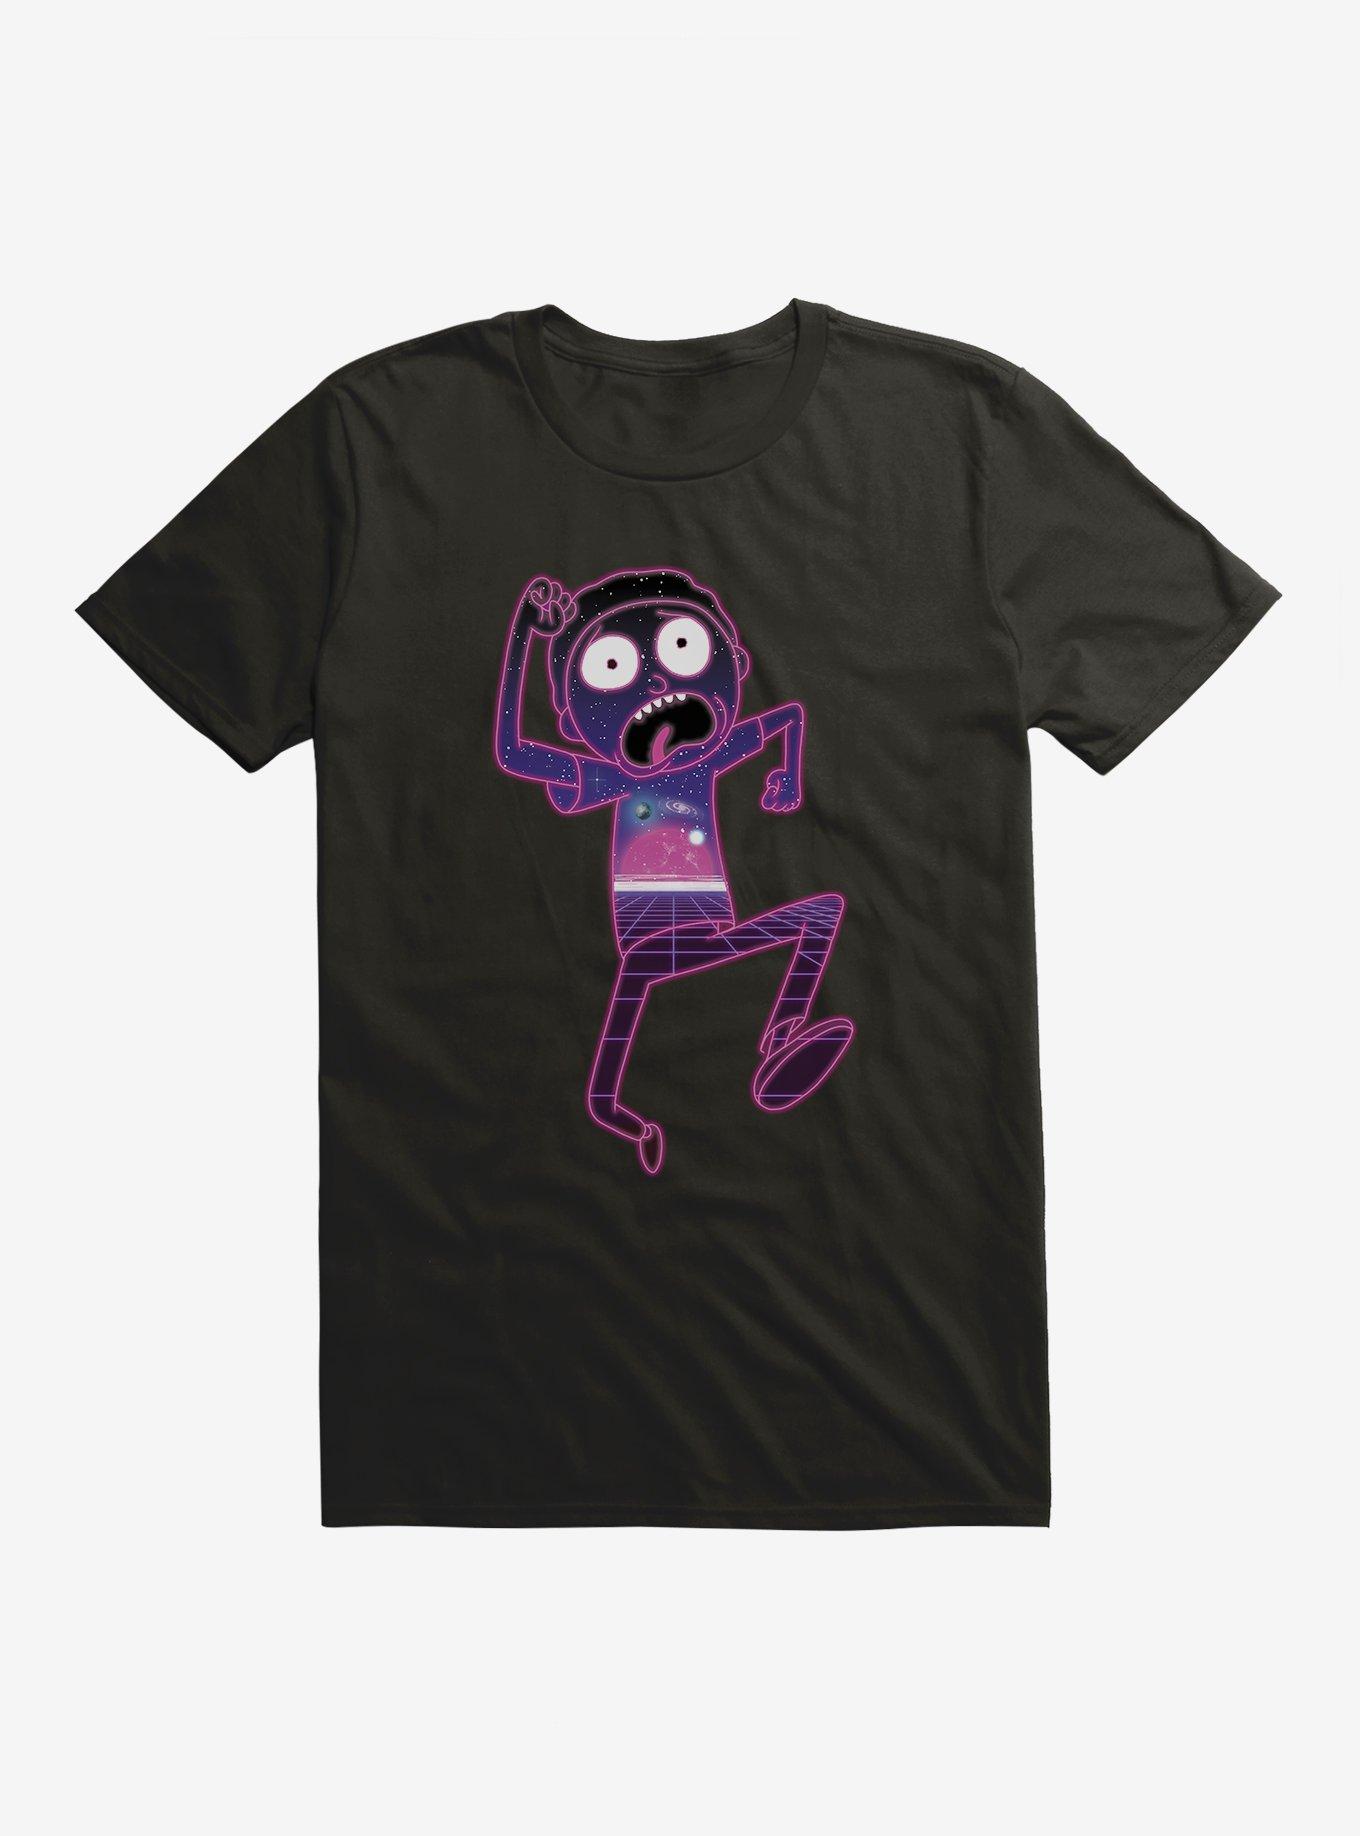 Rick And Morty Virtual Space Morty T-Shirt, , hi-res